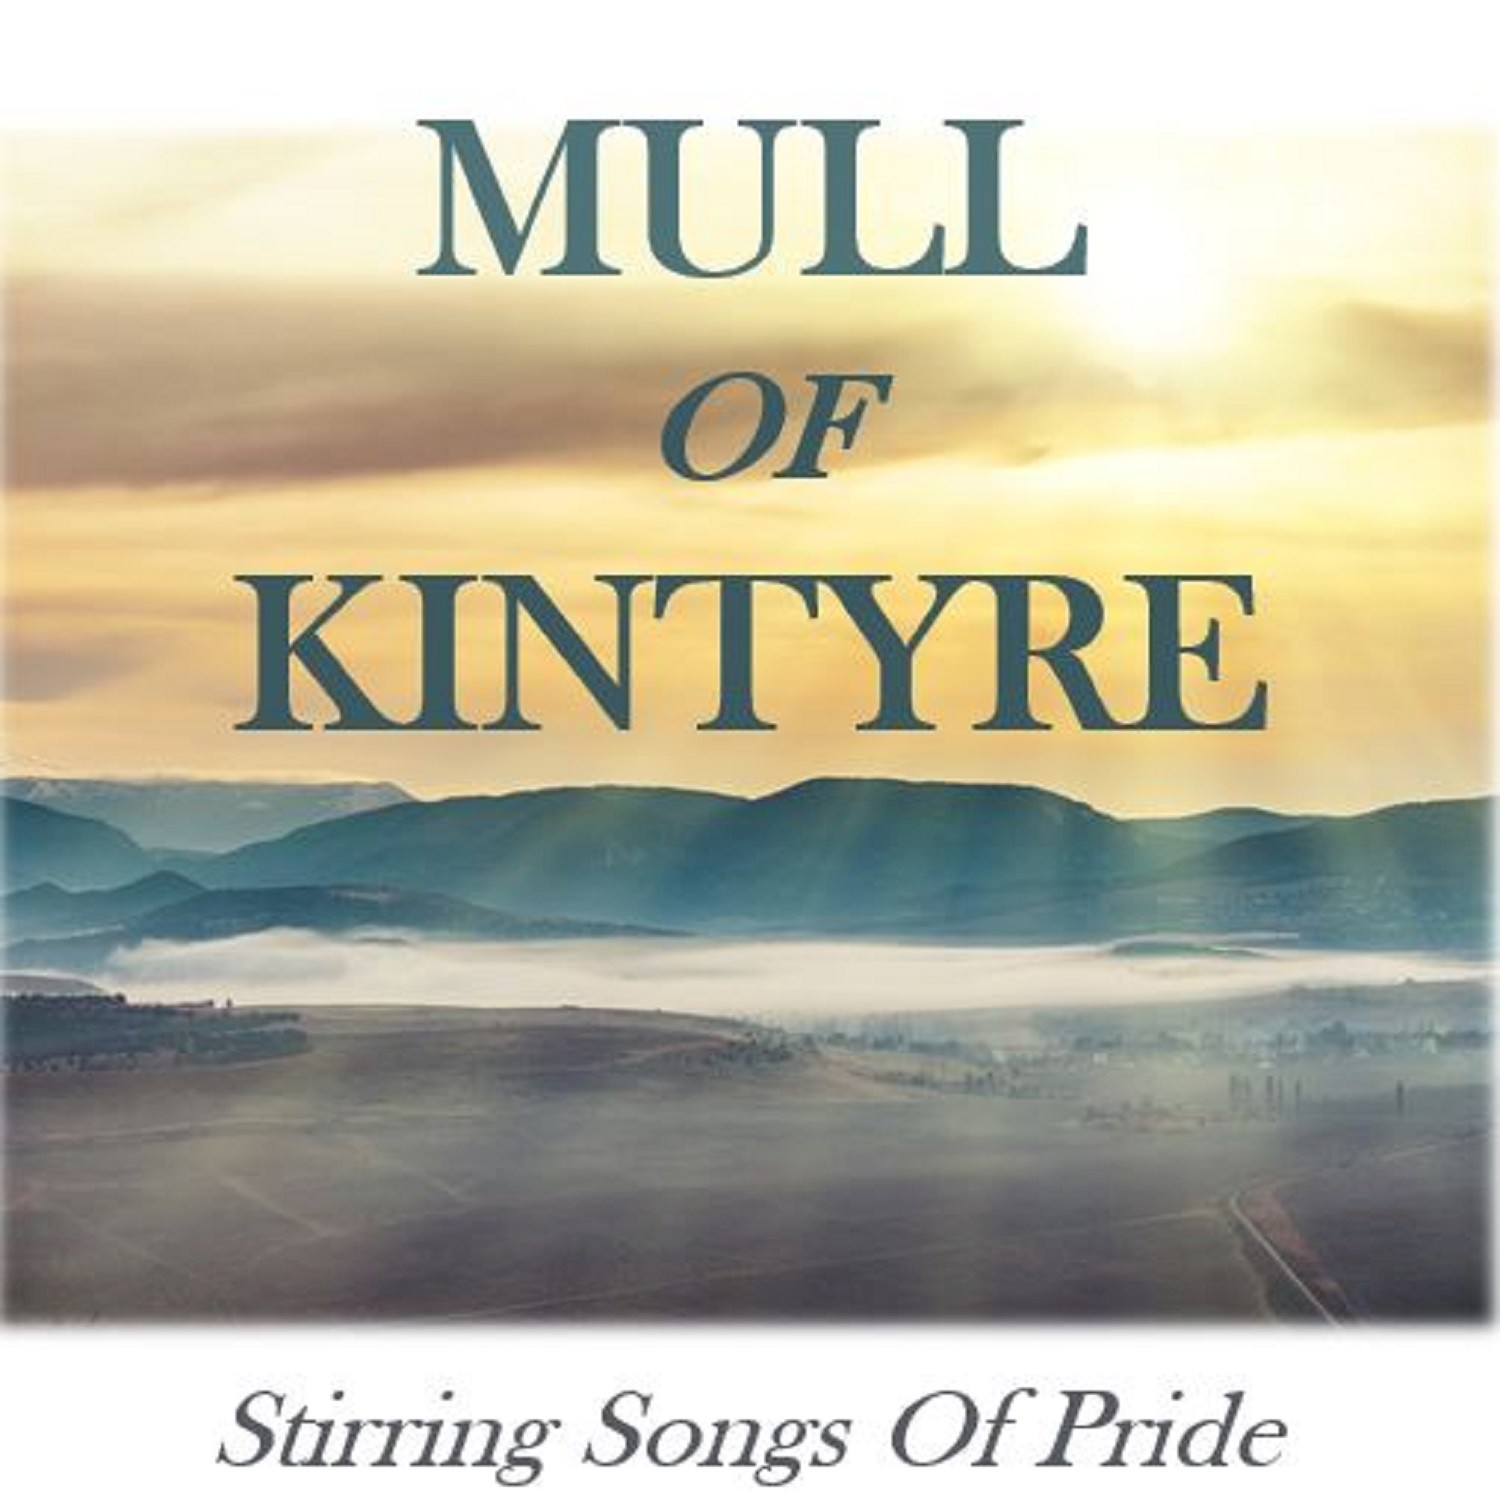 The Rowan Tree Medley: Bonnie Galloway /The Waters of Kylesku / The Rocky Road to Dublin (Kintyre Mix)